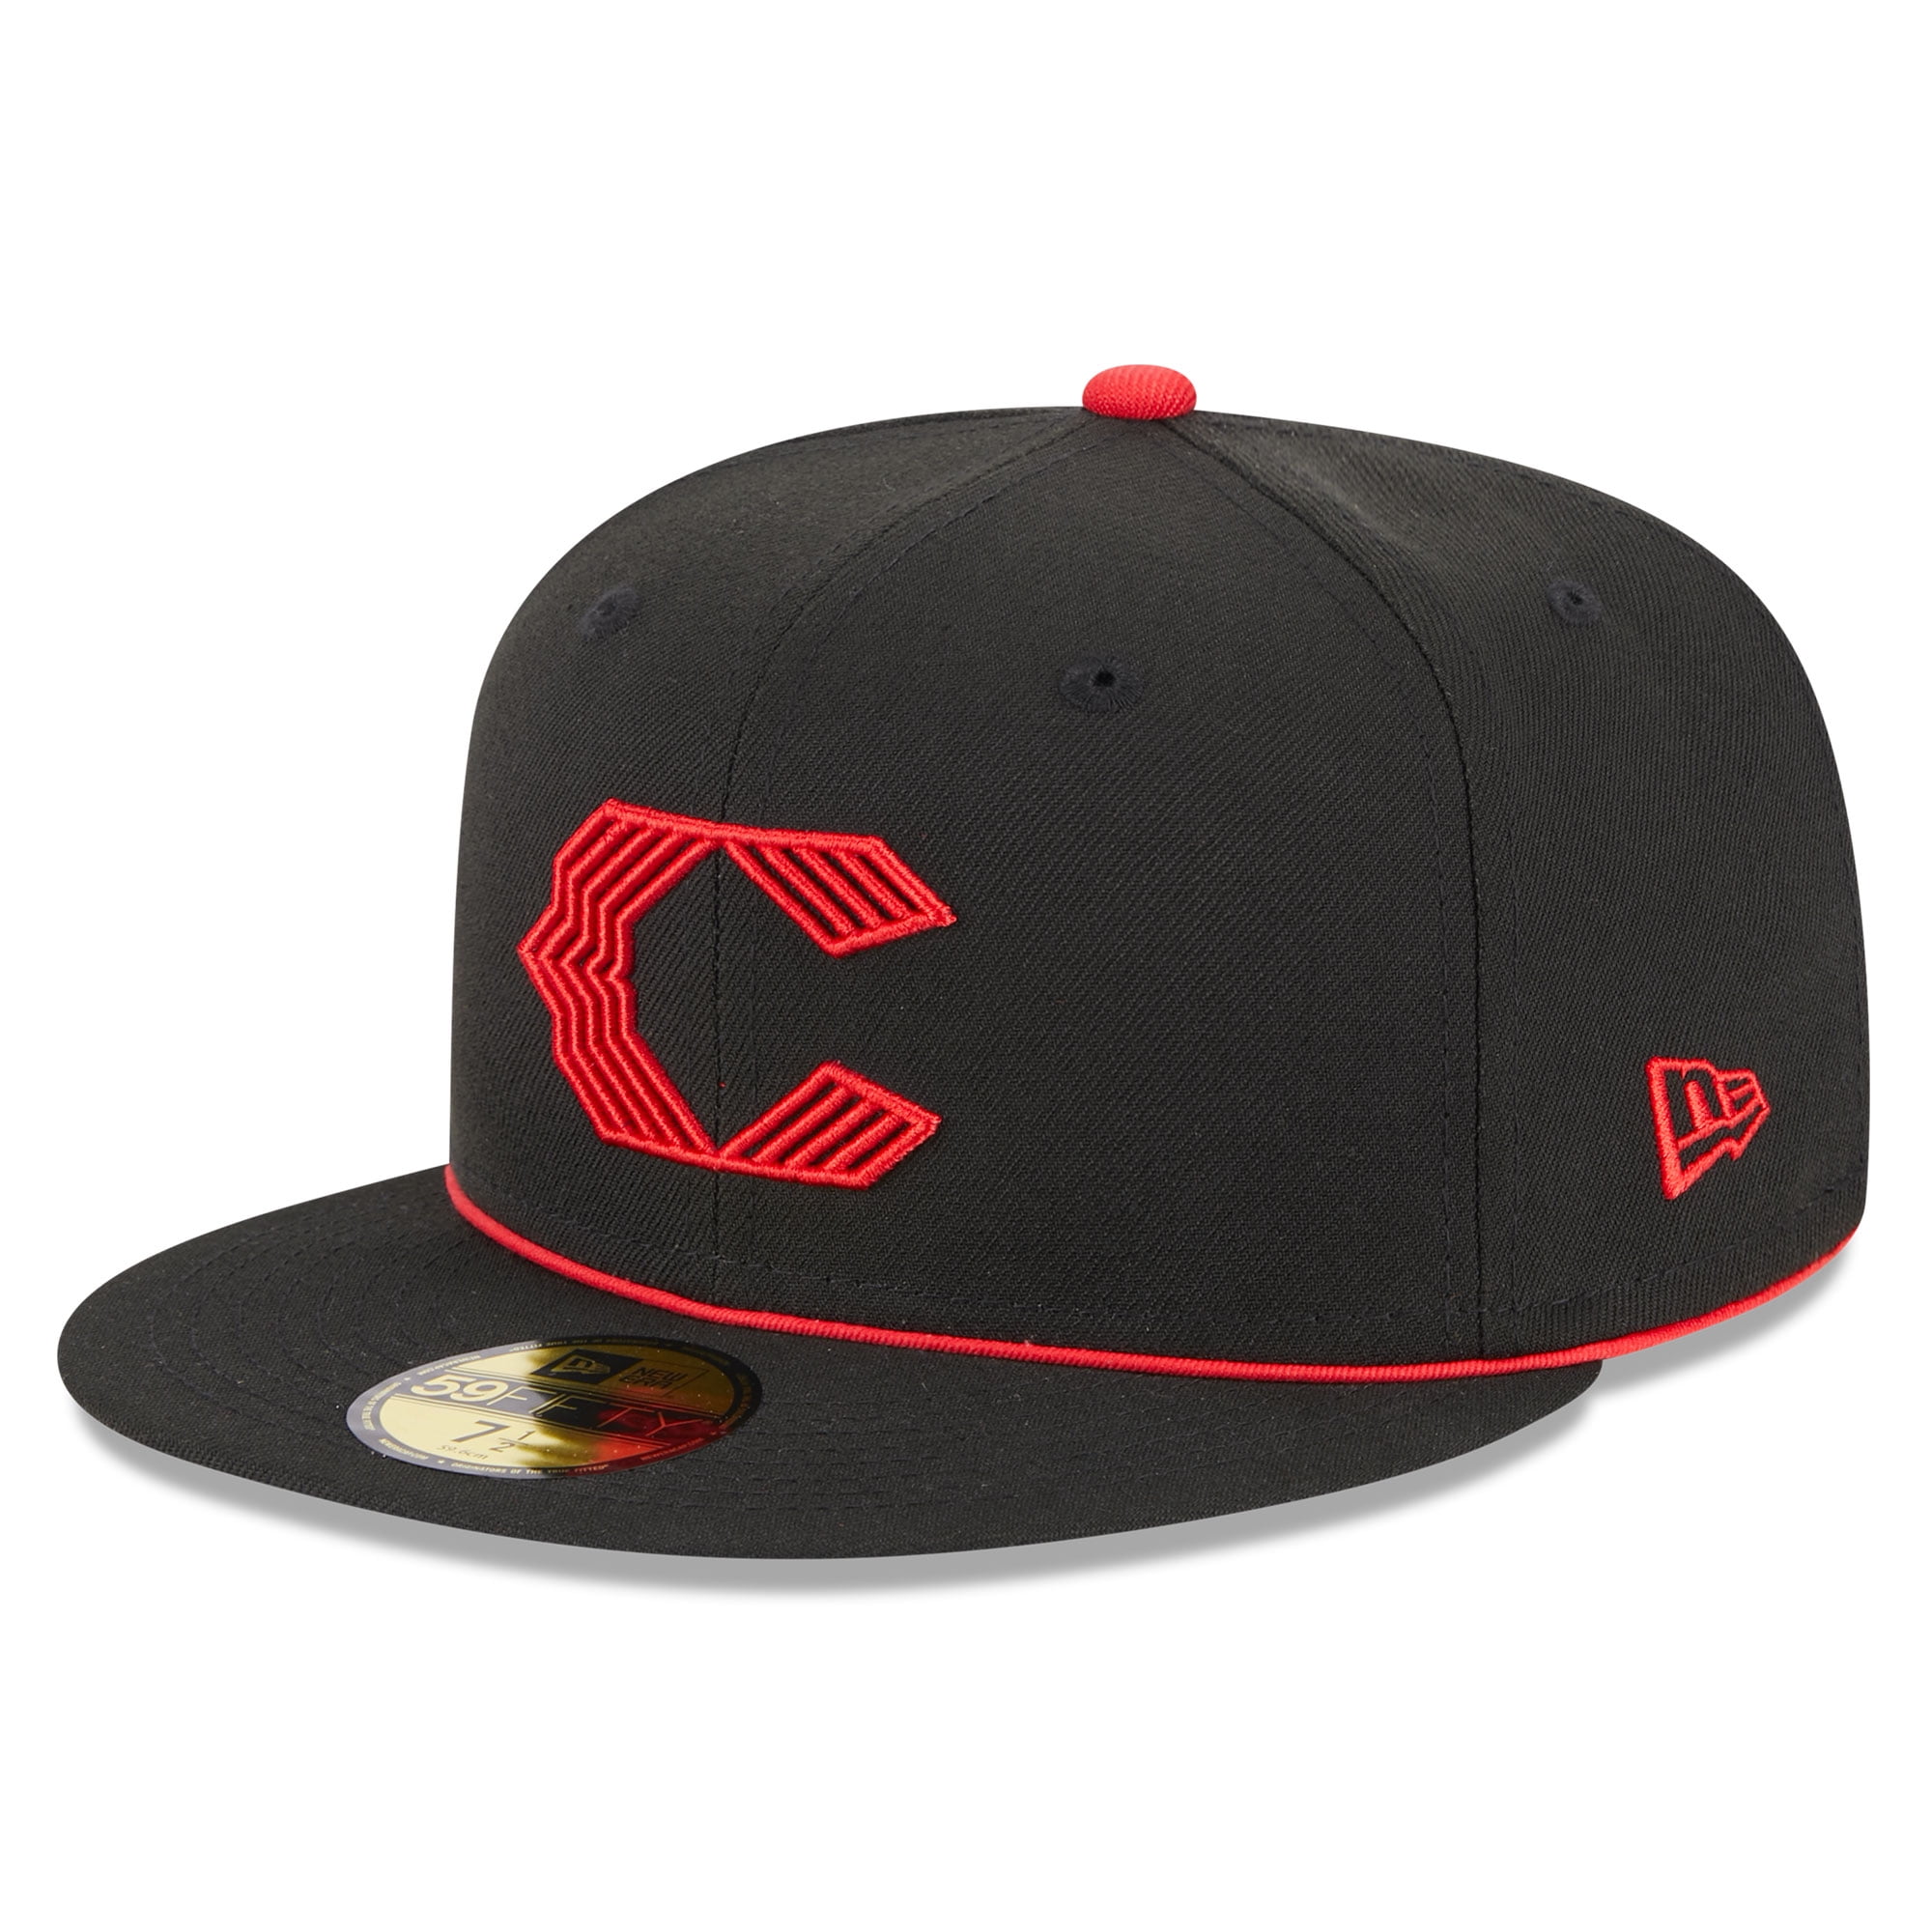 Cincinnati Reds 59FIFTY Fitted New Era Red Hat